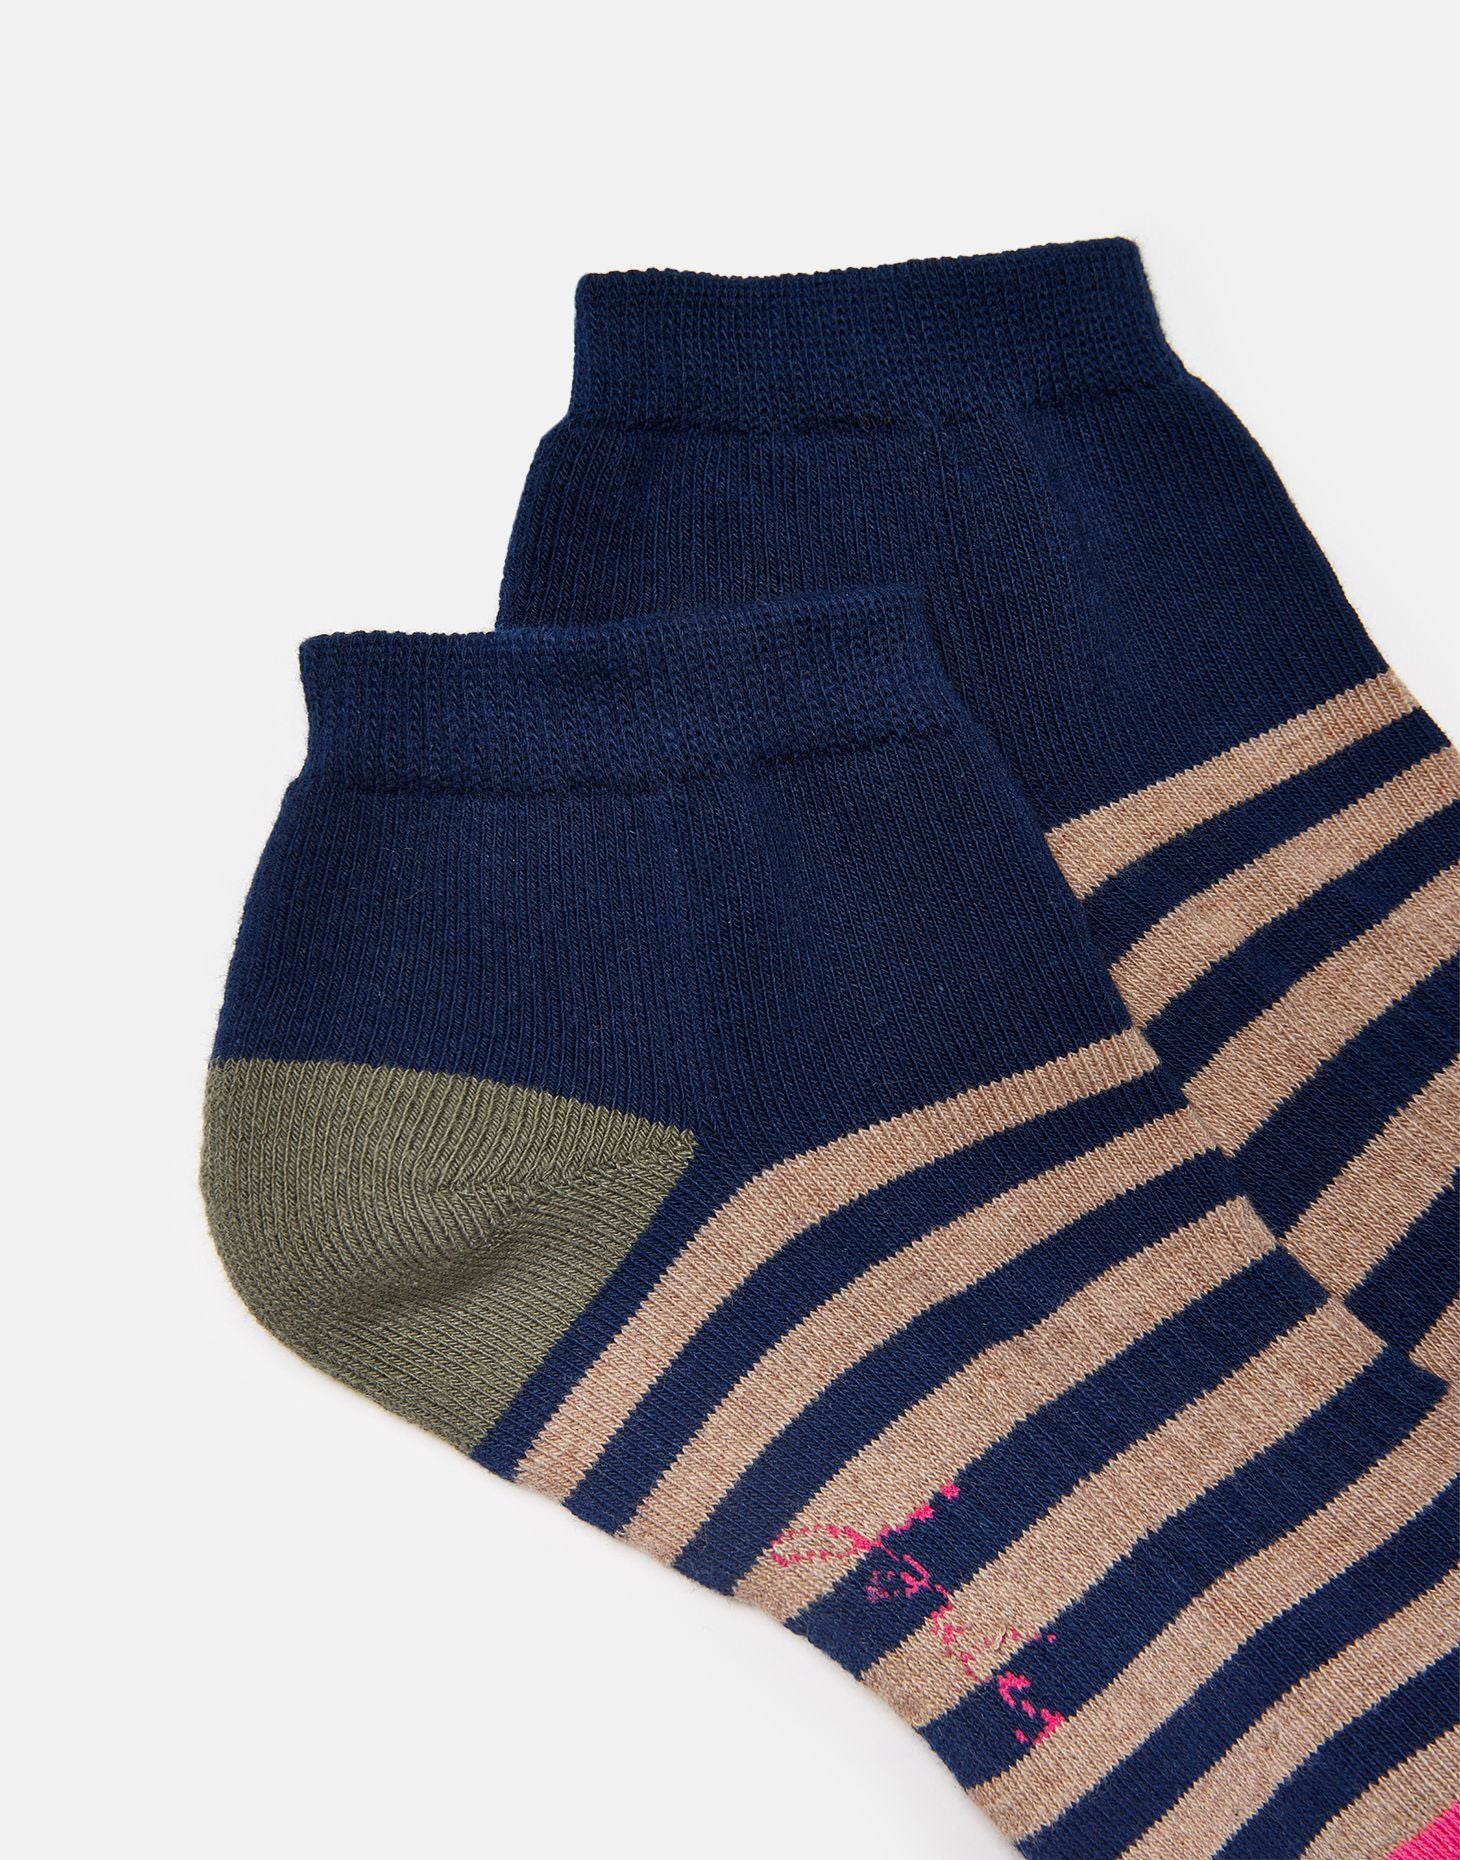 Chedworth Trainer Socks - Navy Stripe